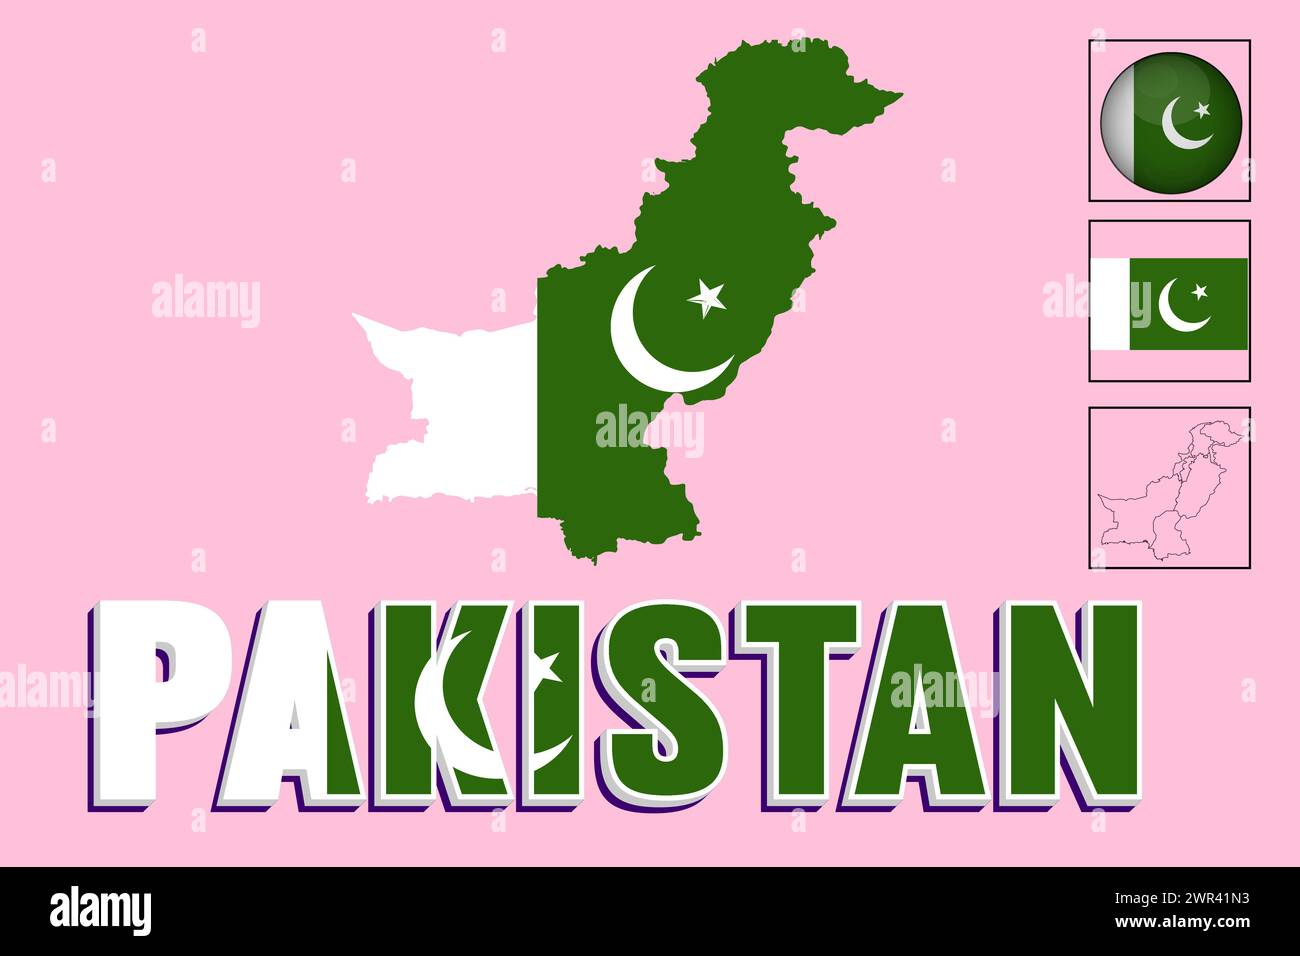 Pakistanische Flagge und Karte in Vektorillustration Stock Vektor